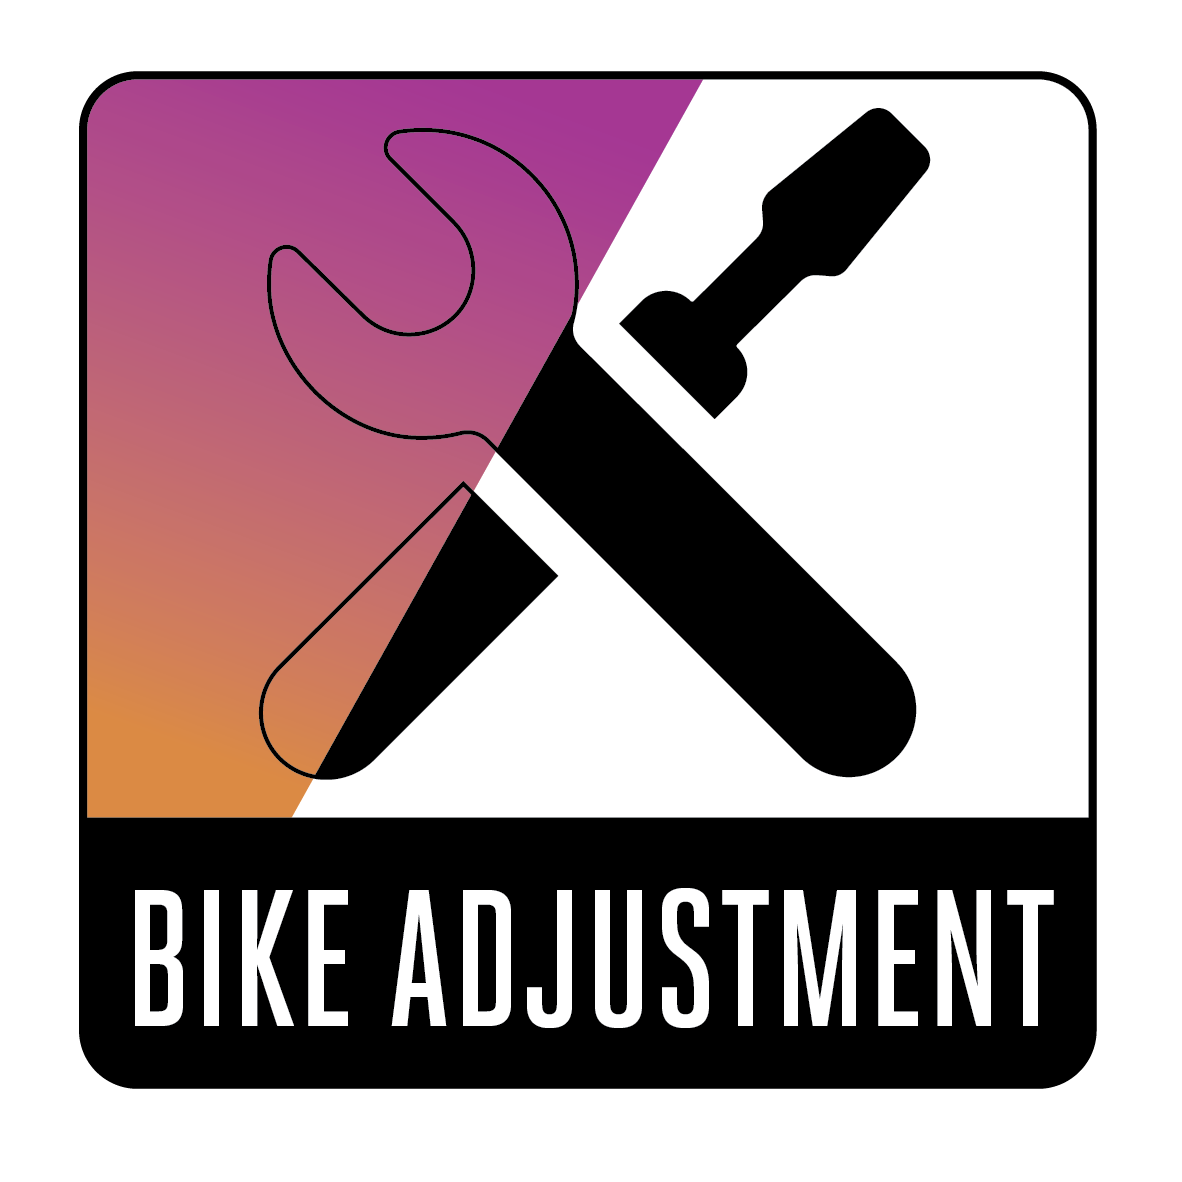 Bike adjustment